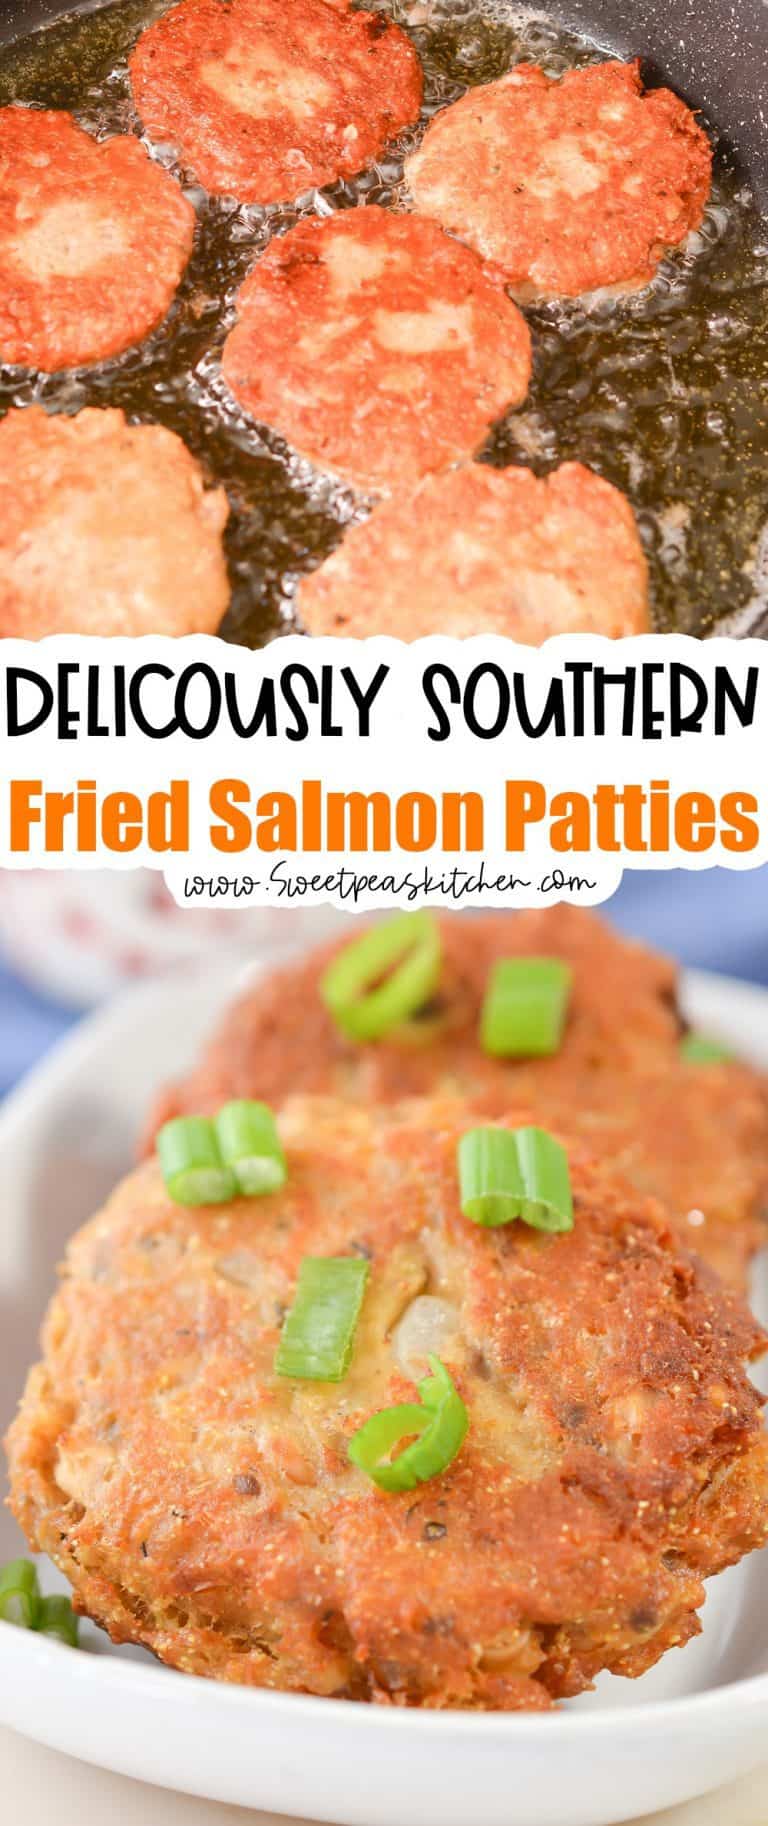 Southern Fried Salmon Patties - Sweet Pea's Kitchen